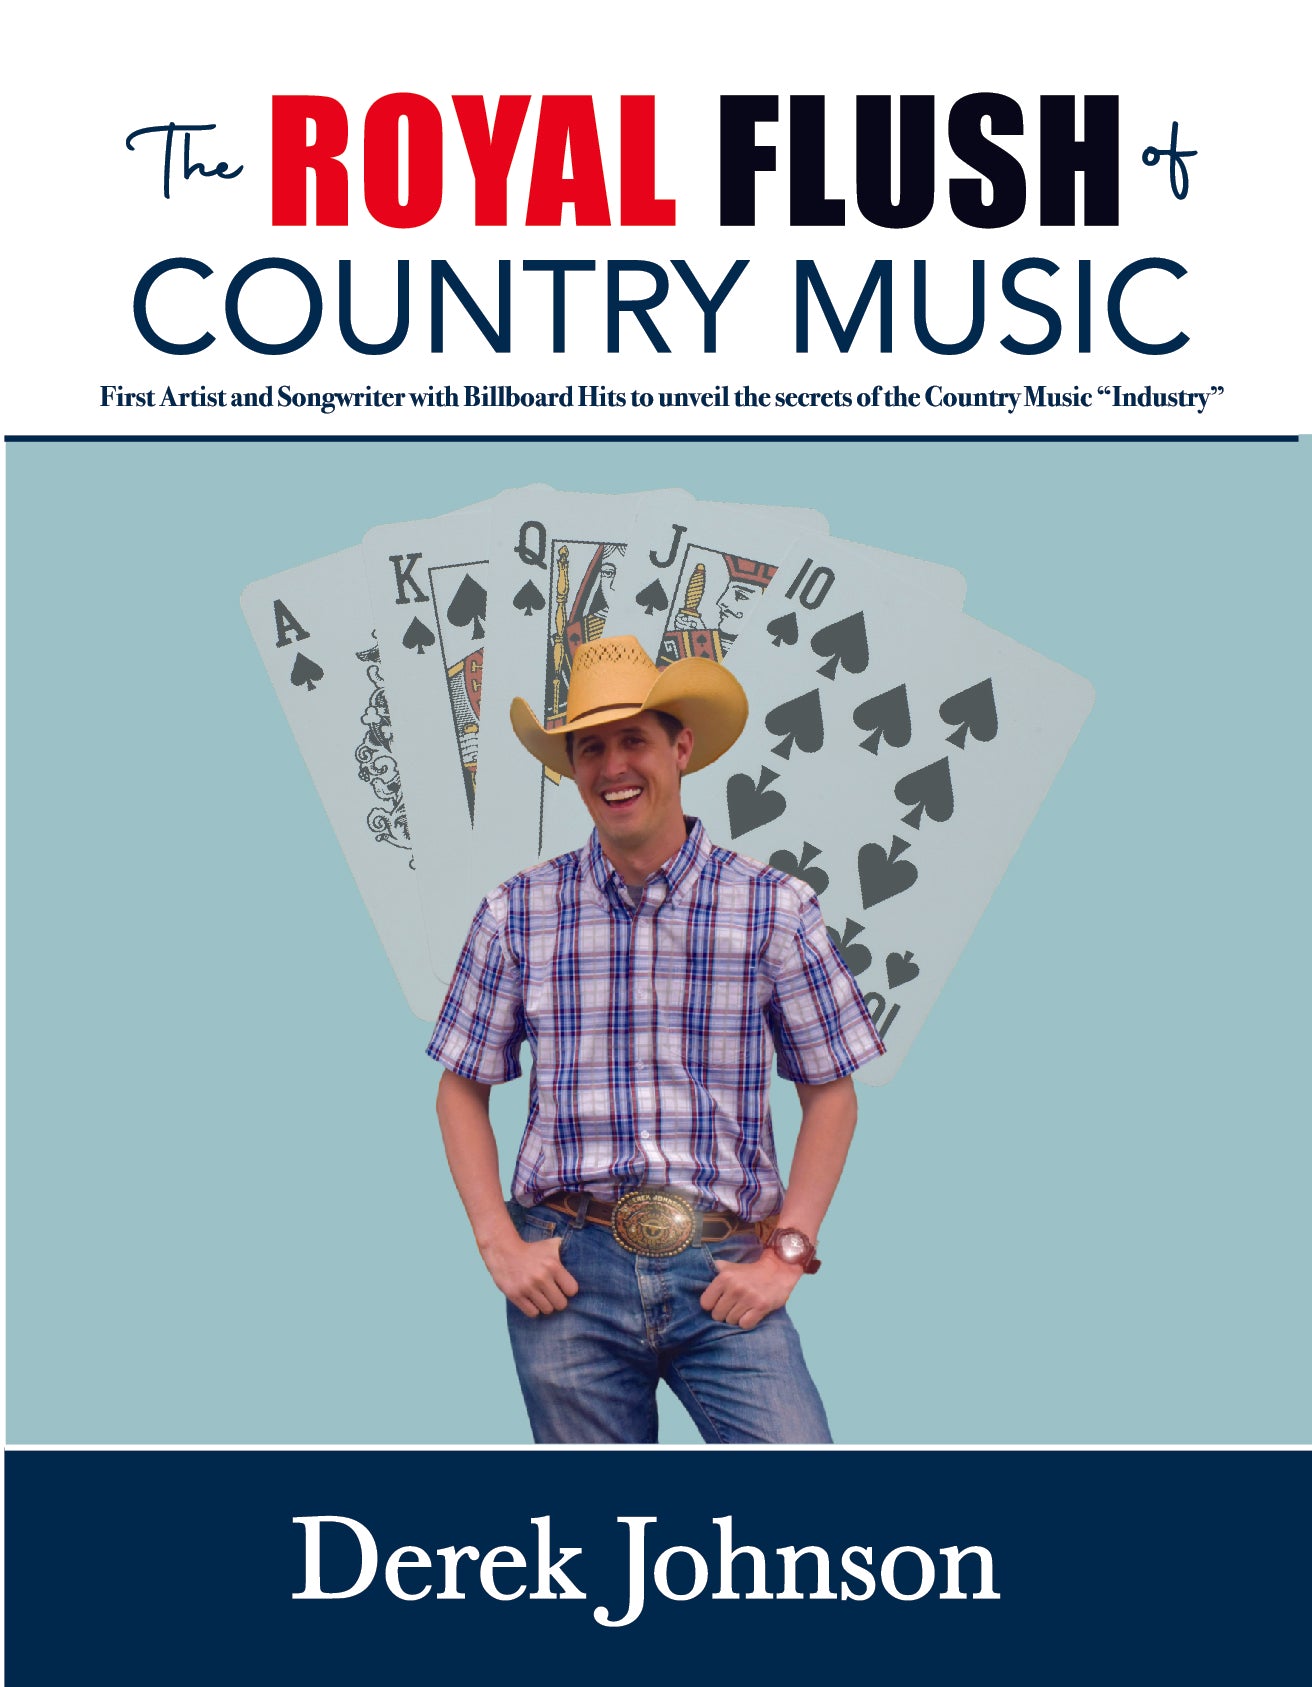 The Royal Flush of Country Music by Derek Johnson